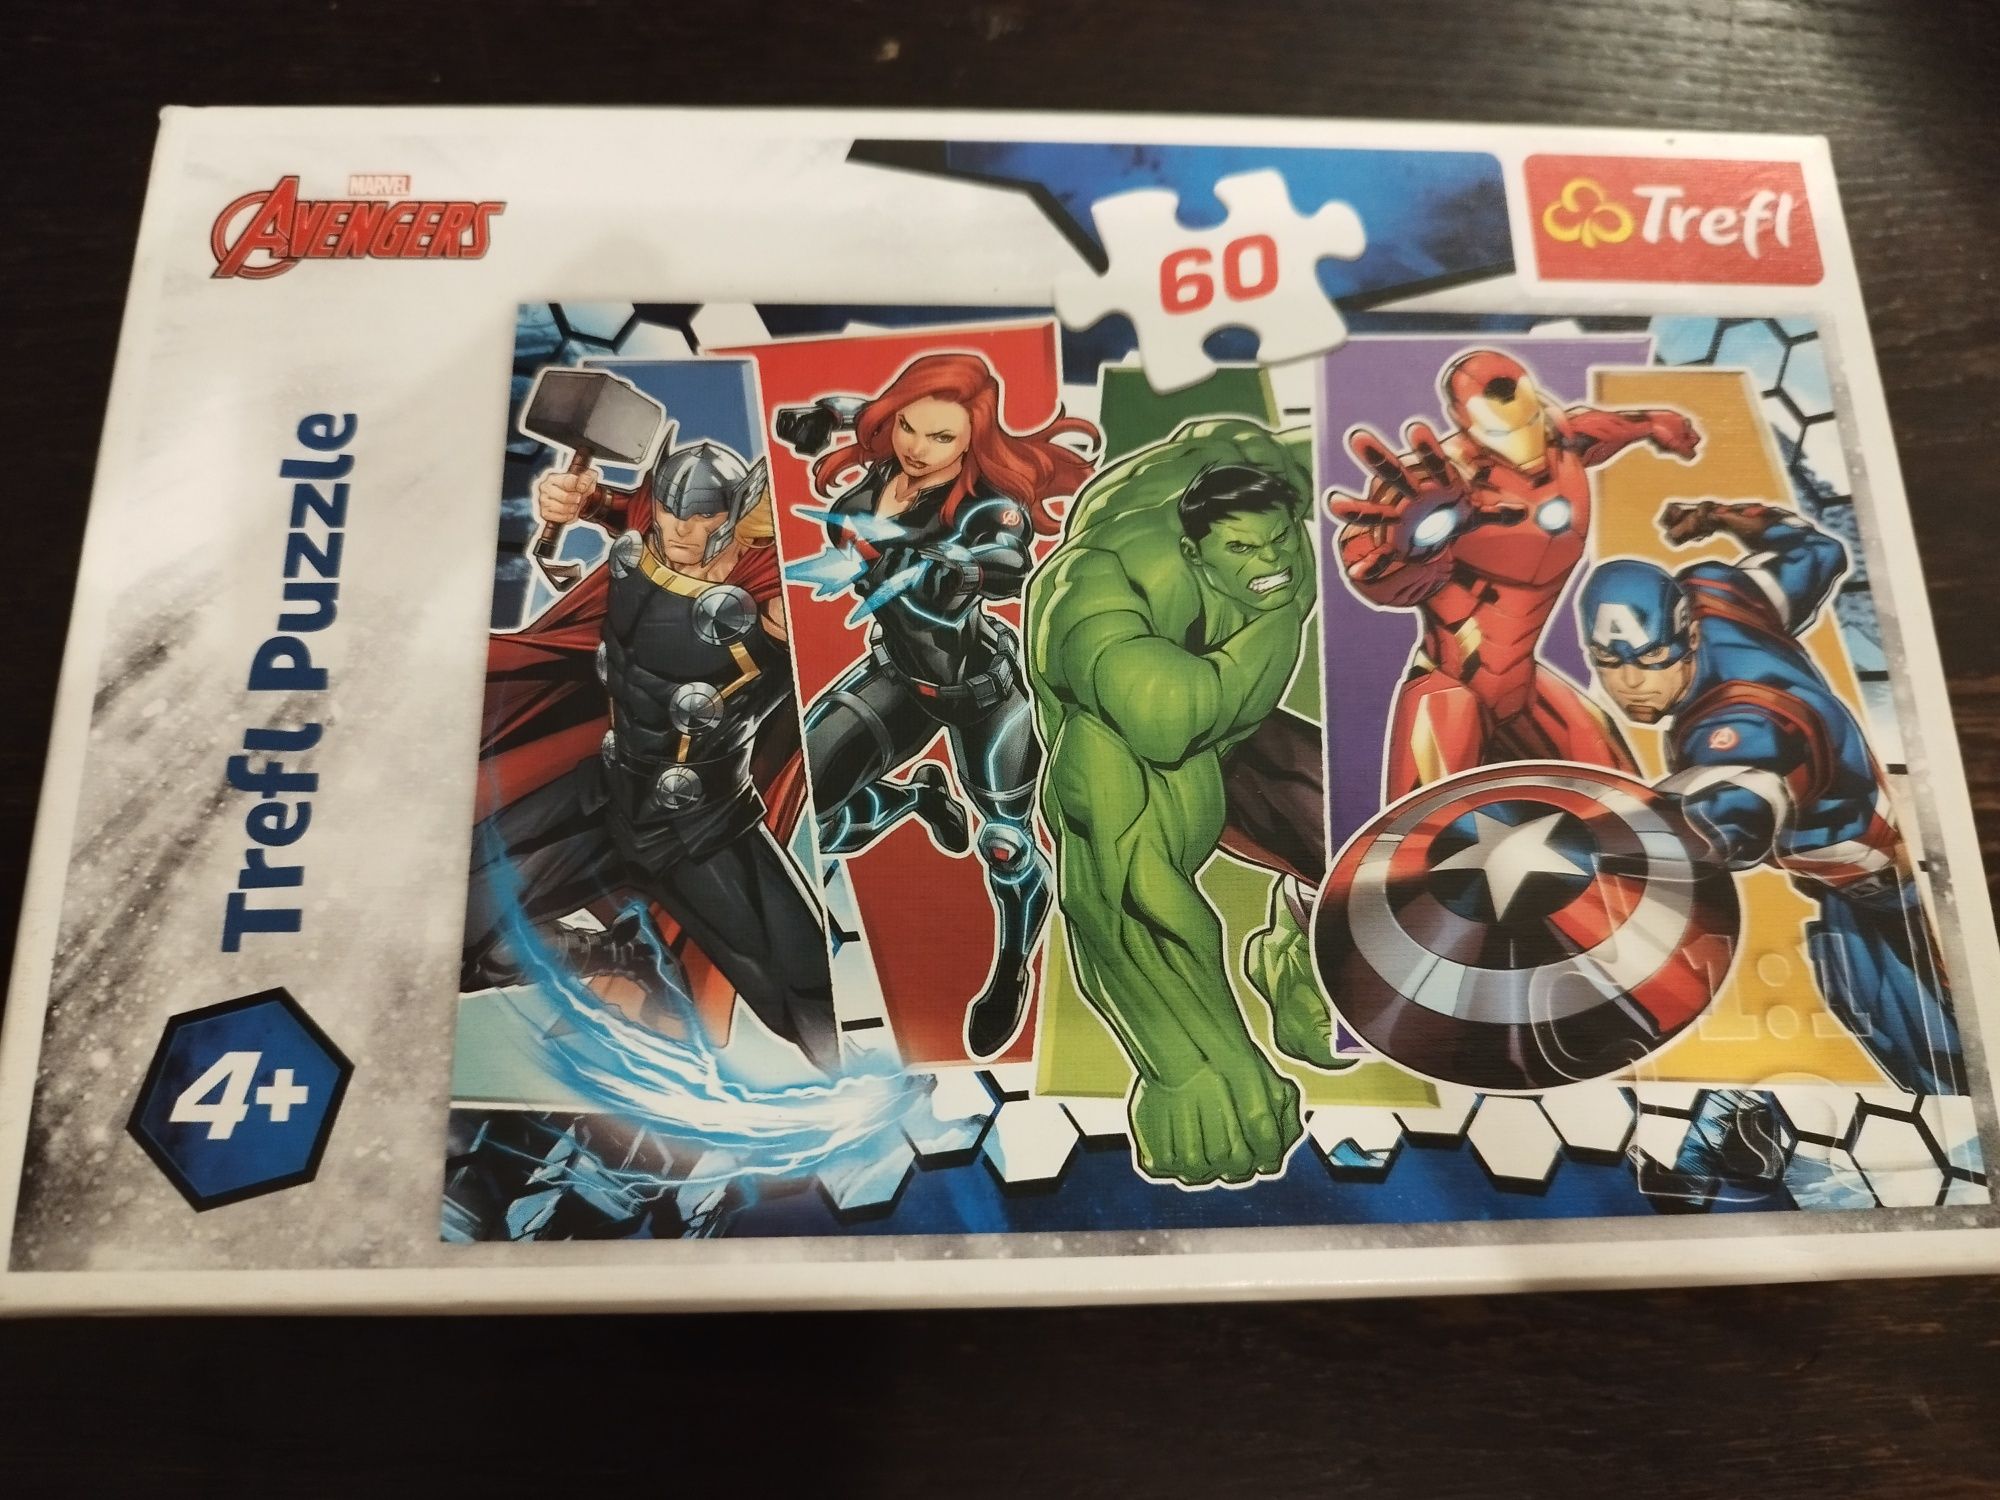 Puzzle Trefl Avengers Avengersi 60 elementów 4+ Marvel